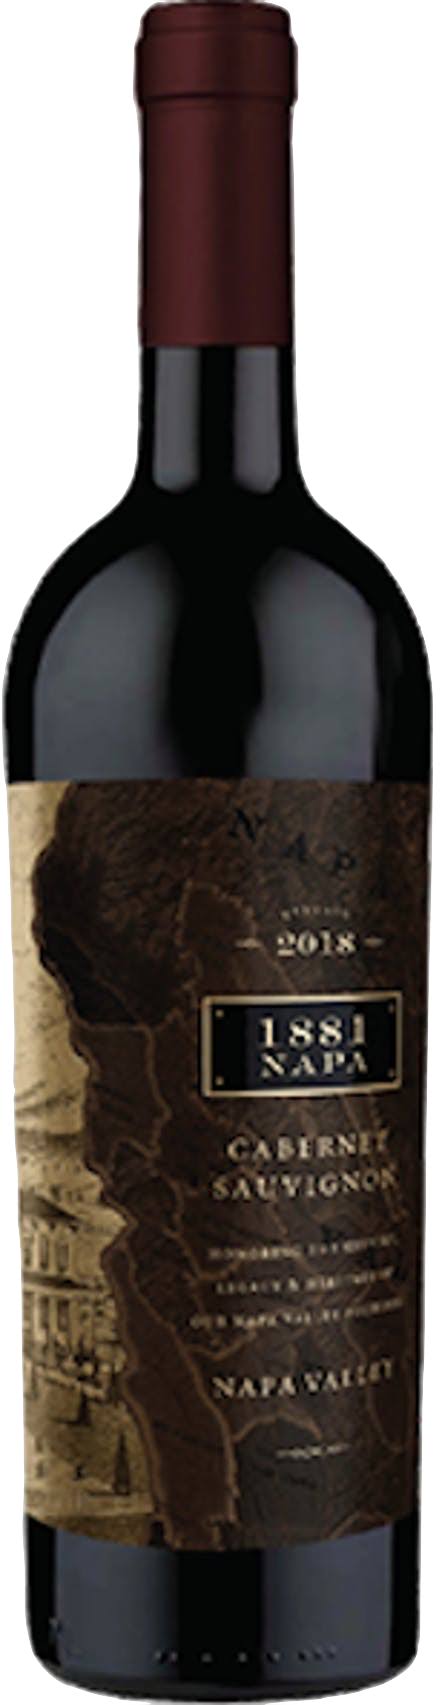 1881 Napa Cabernet Sauvignon, Napa Valley, Vintage 2018 - 750 ml